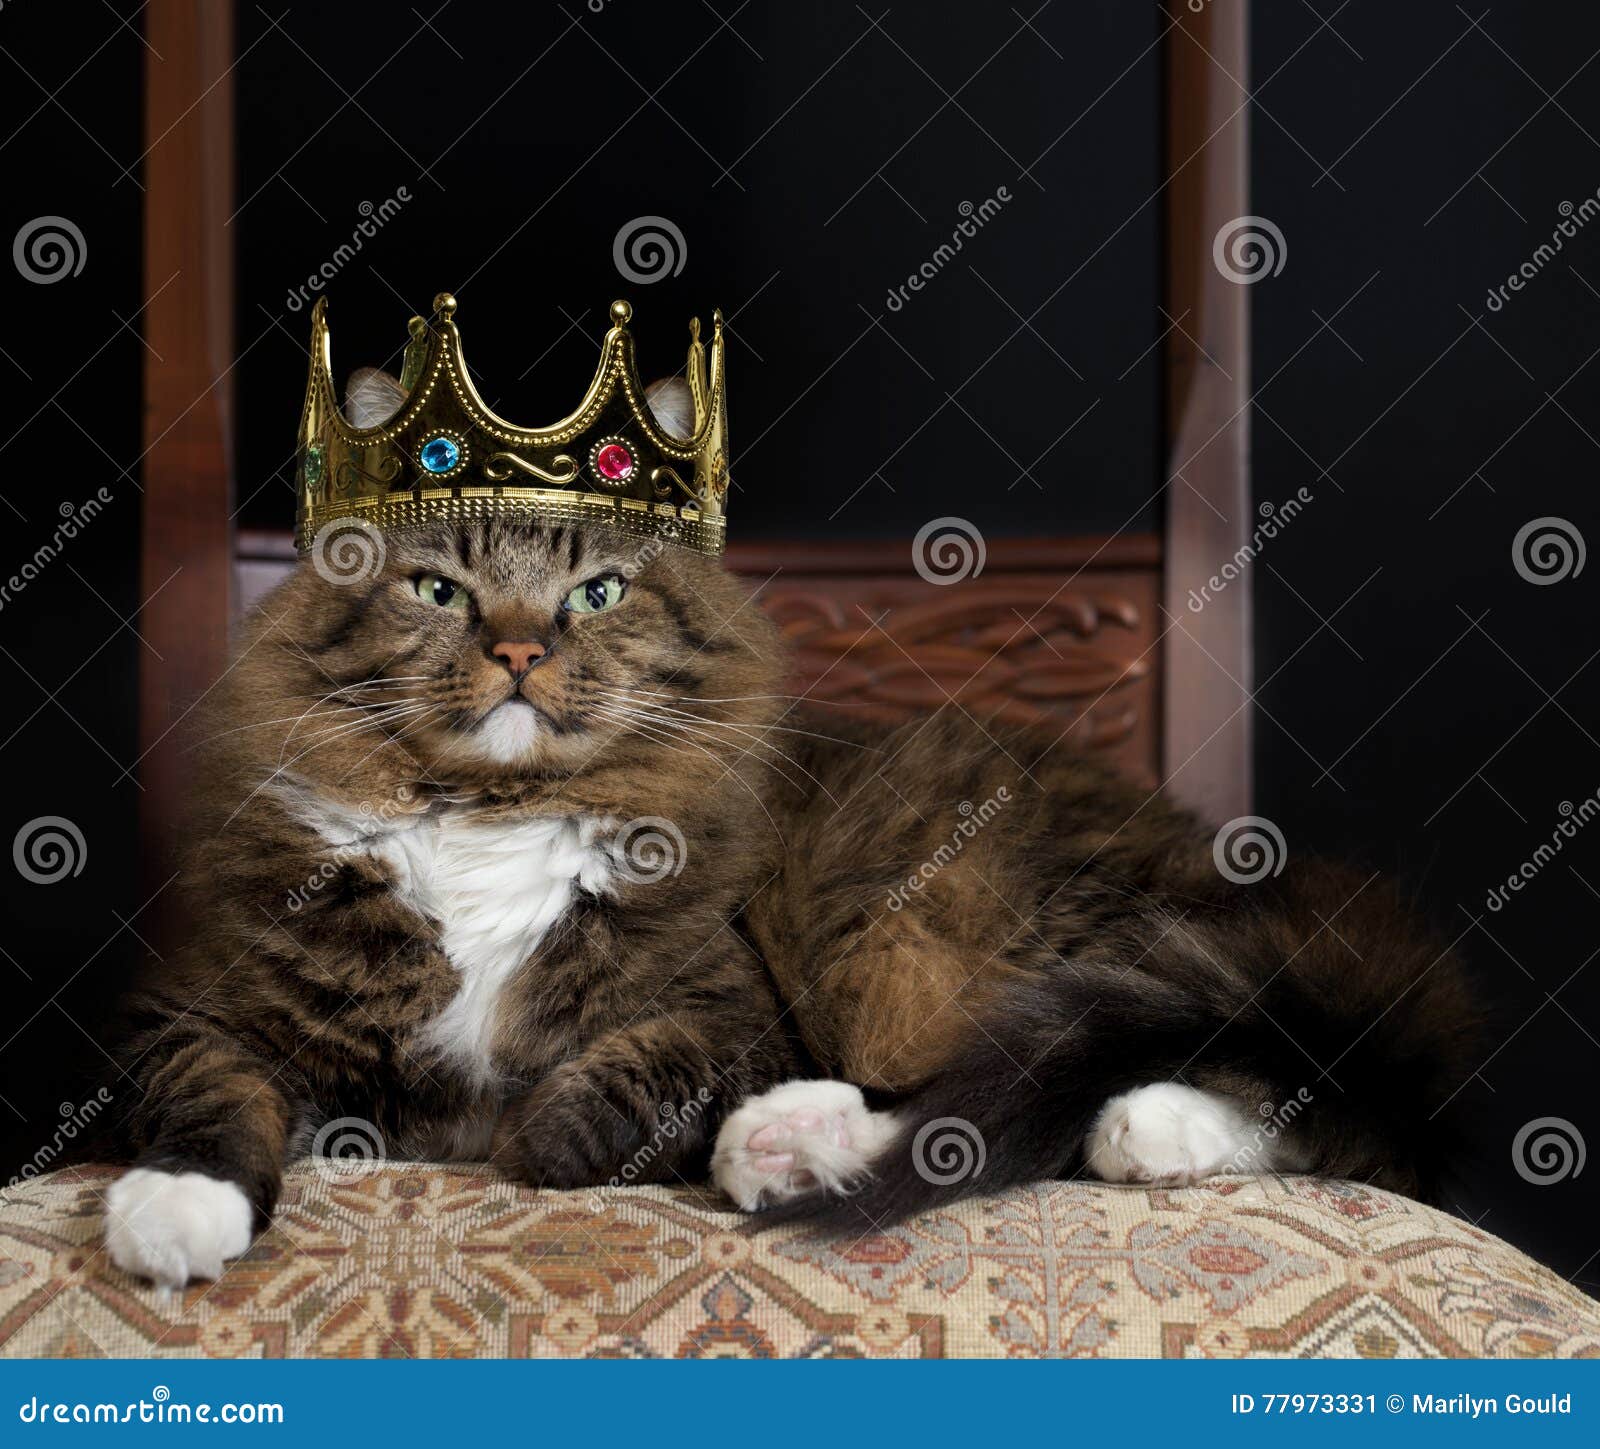 cat as royalty